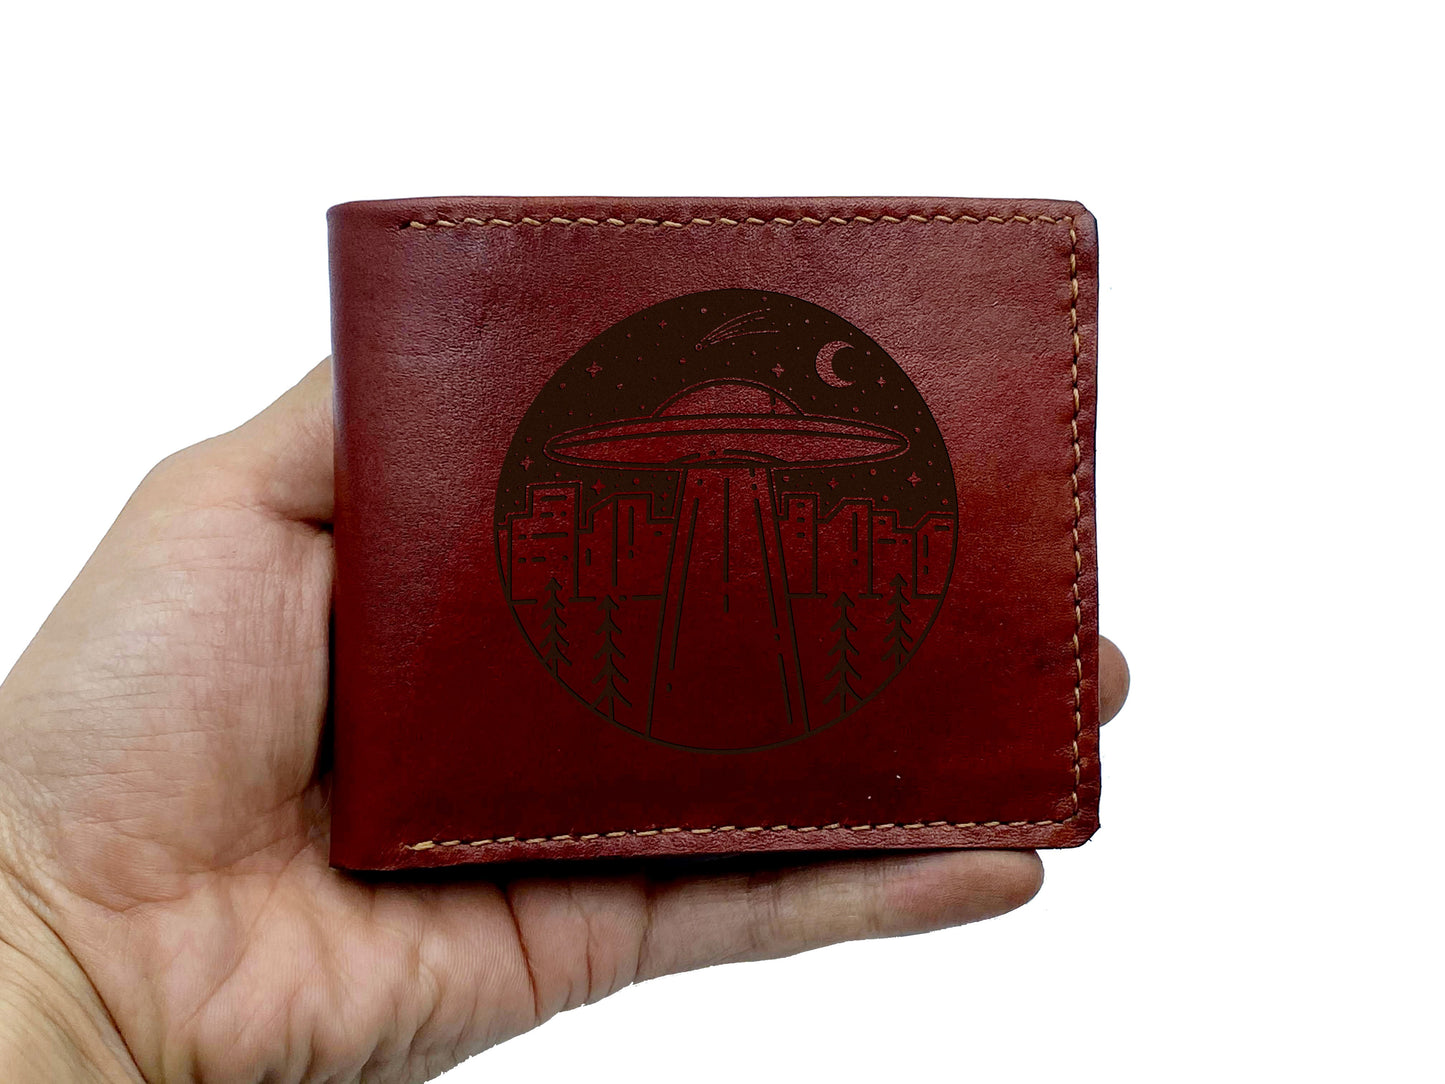 Alien UFO leather men's present, custom engrave gift ideas, Alien starship gift for boyfriend, leather anniversary fun art, wallet for boy